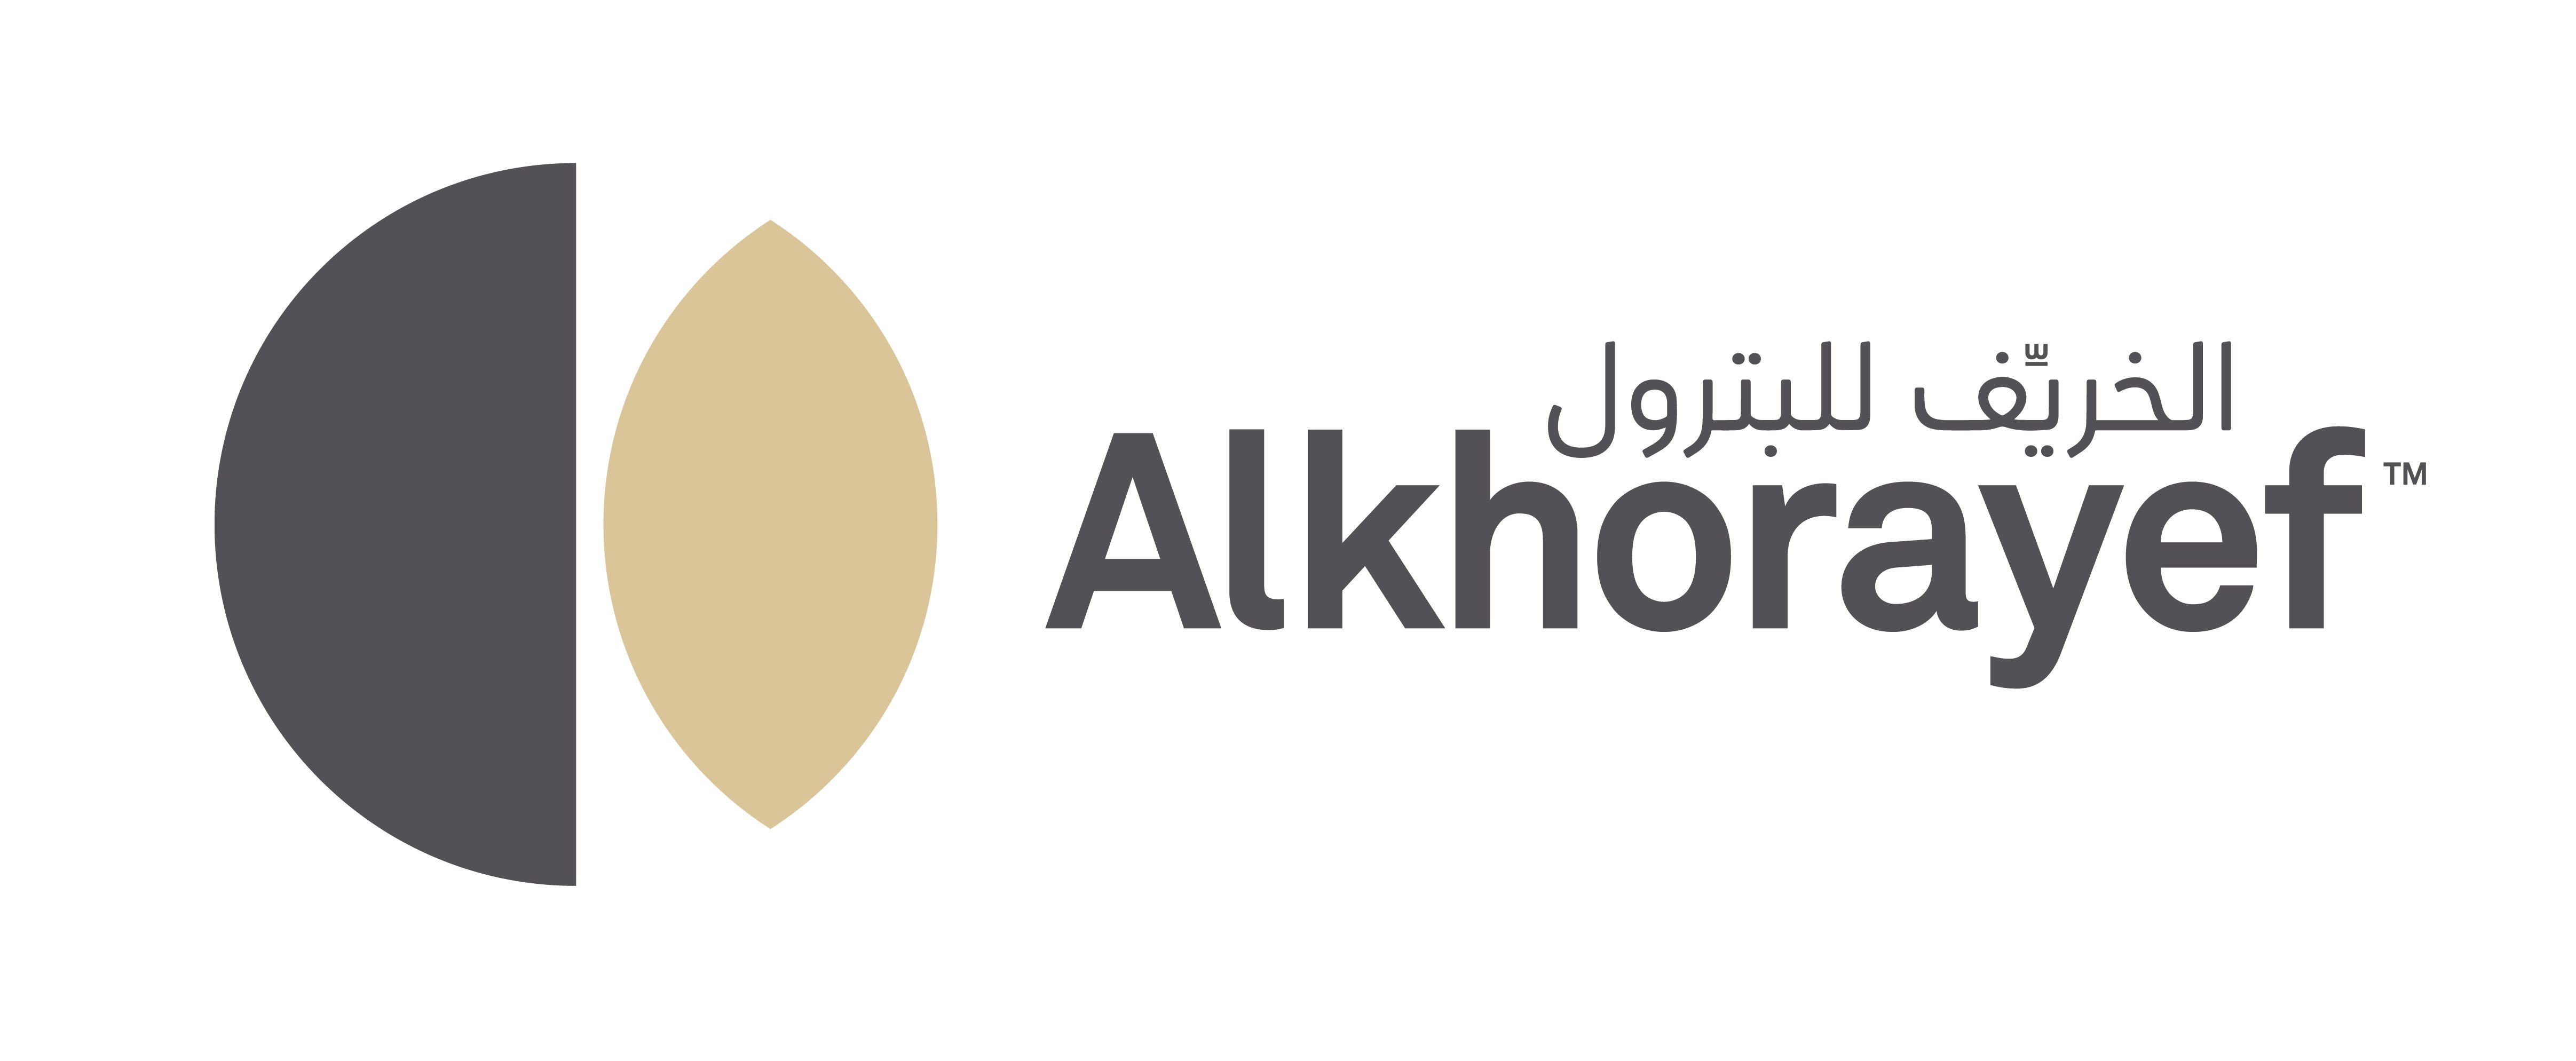 Alkhorayef Petroleum Company